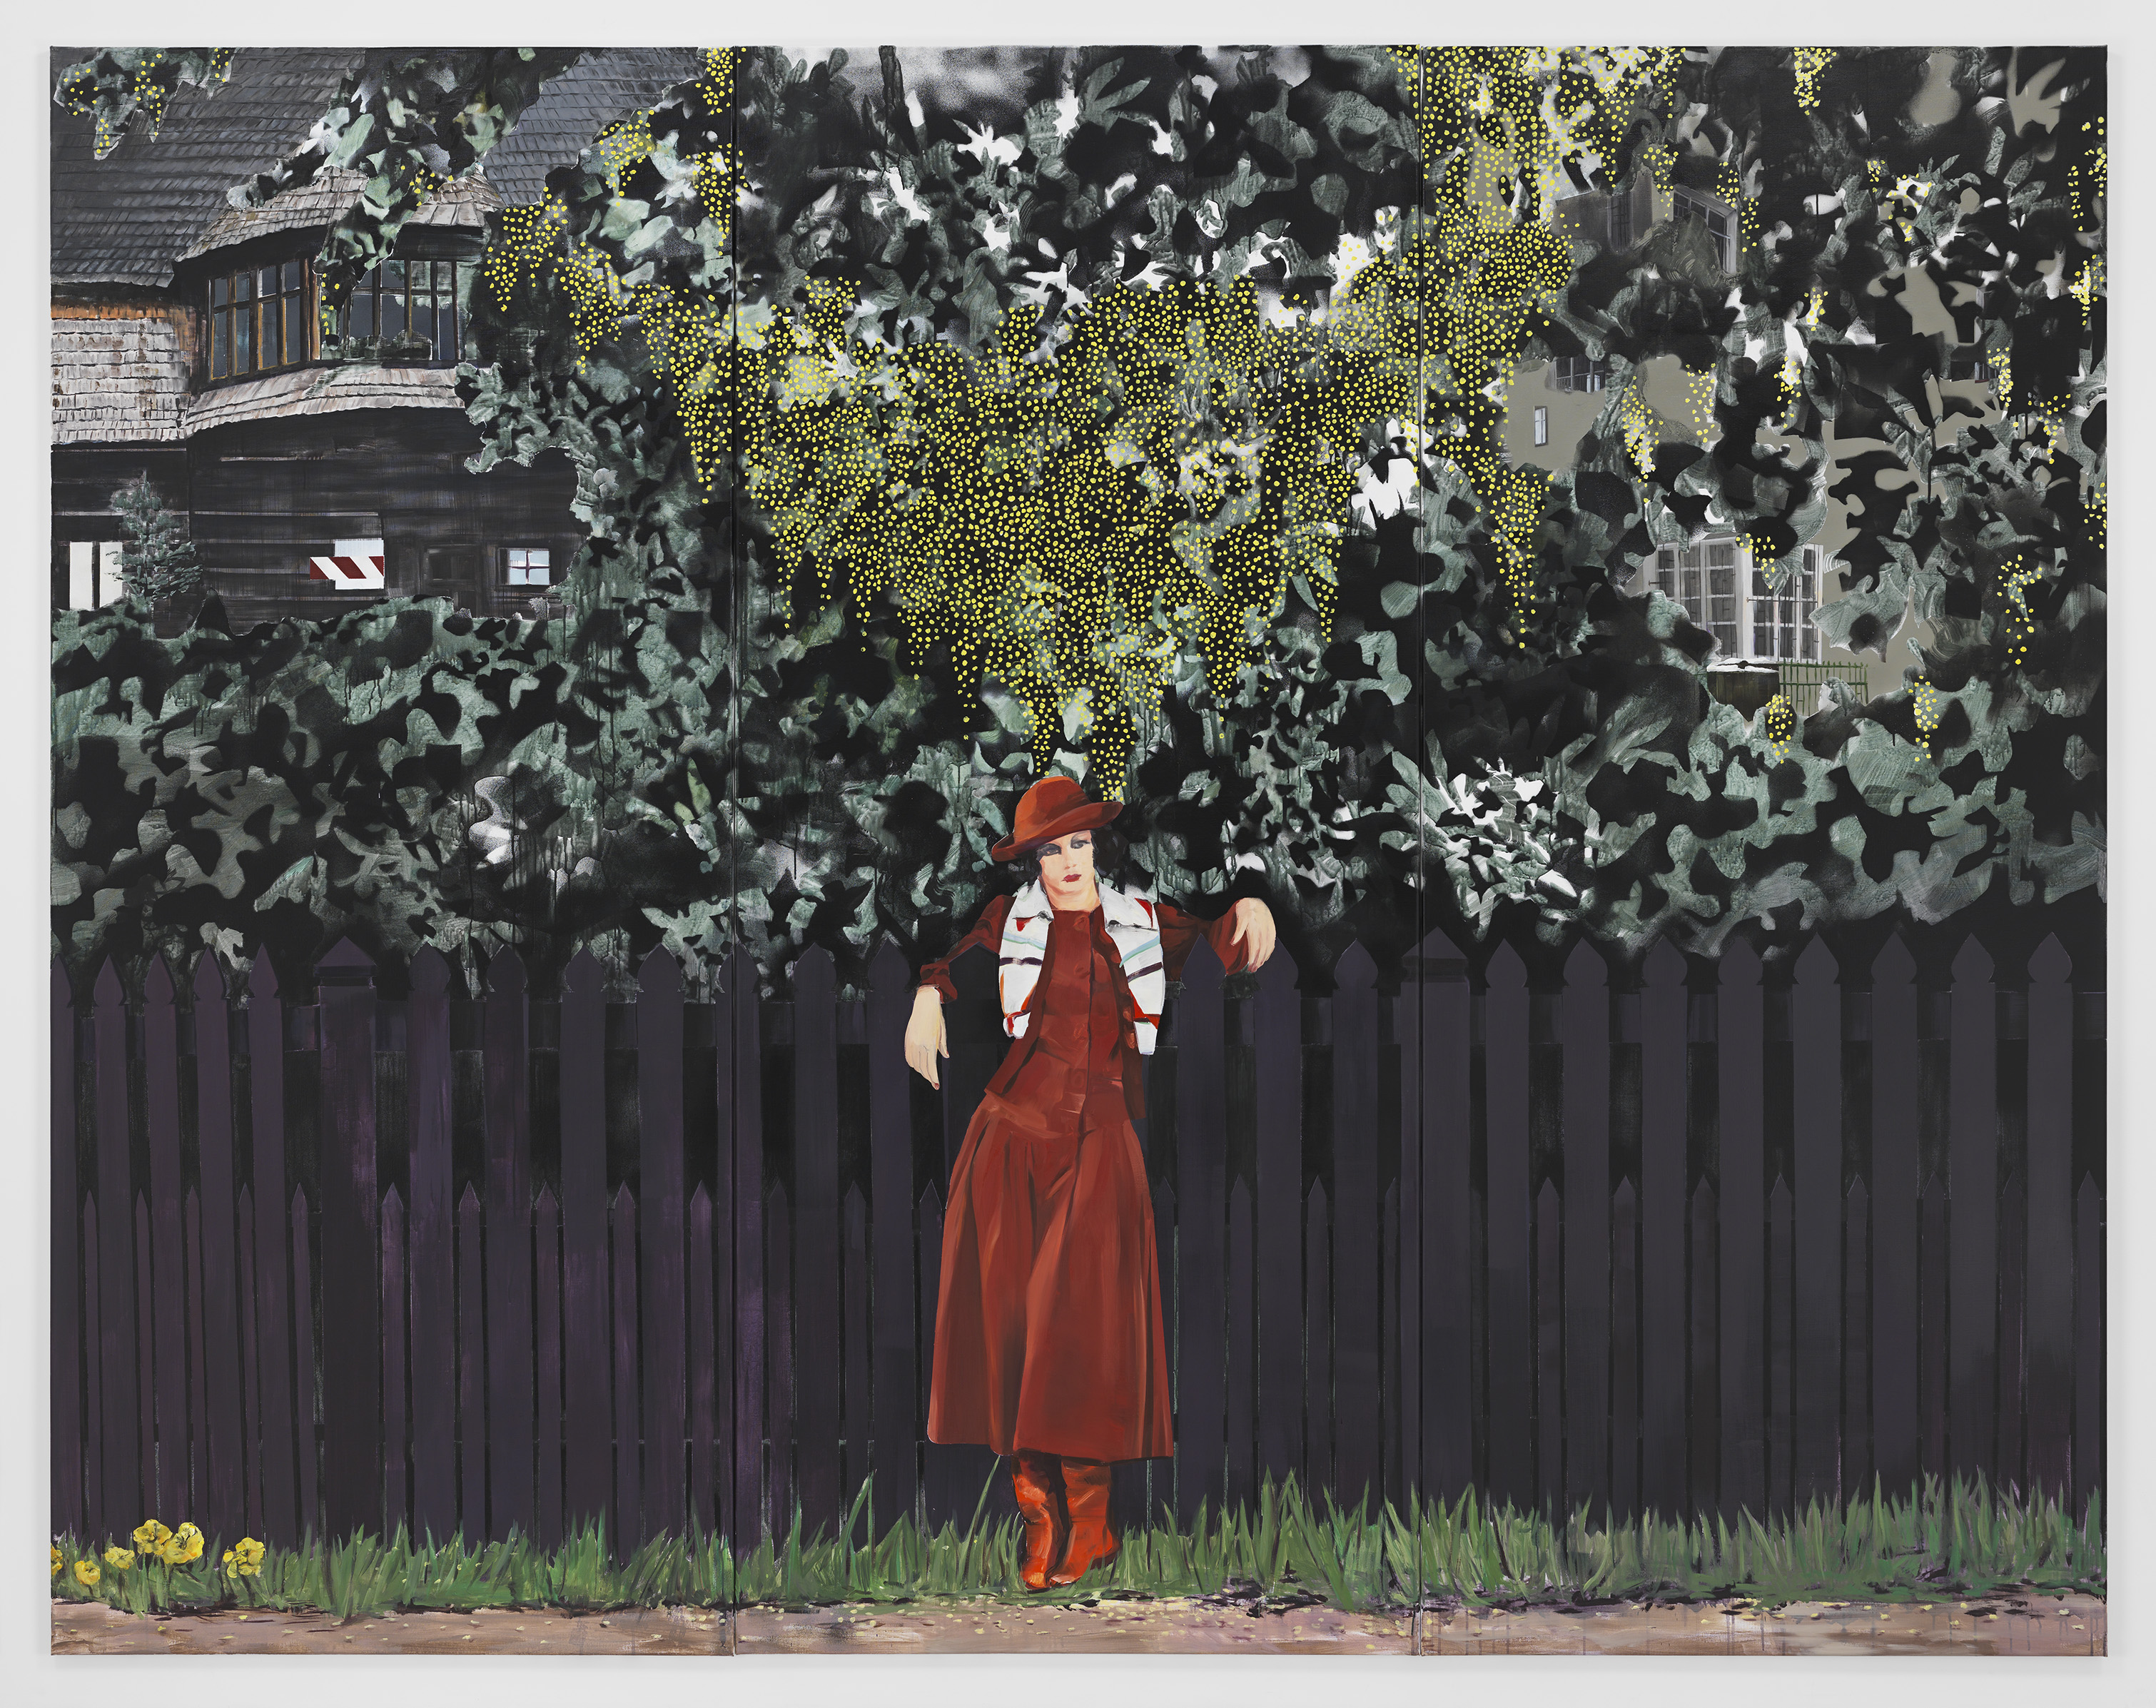 Wisteria by Paulina Ołowska - 2016 - 260 x 333 cm (per total) 